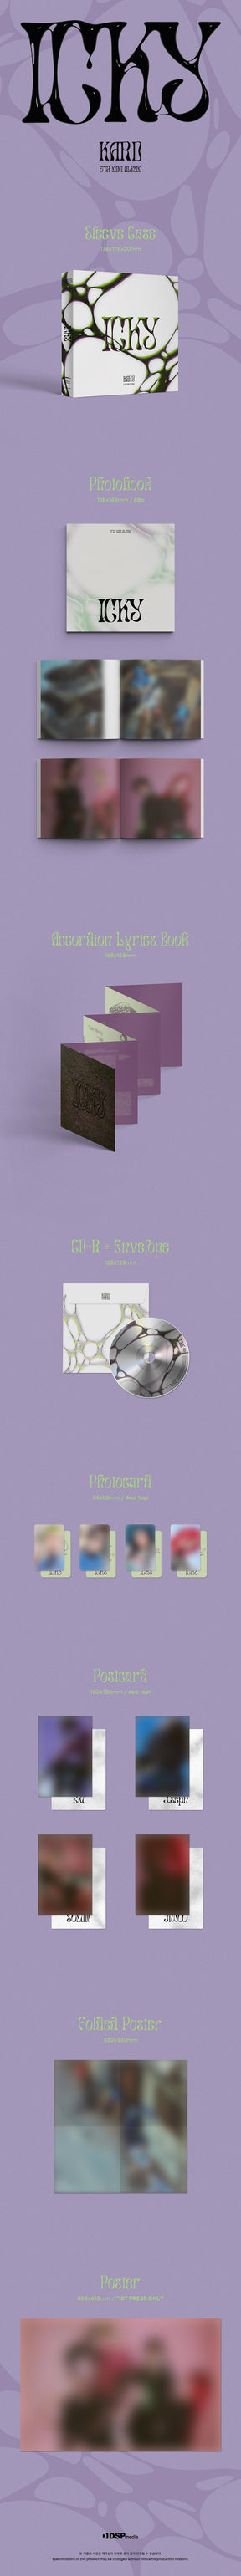 KARD Mini Album Vol. 6 - ICKY (Special Version)